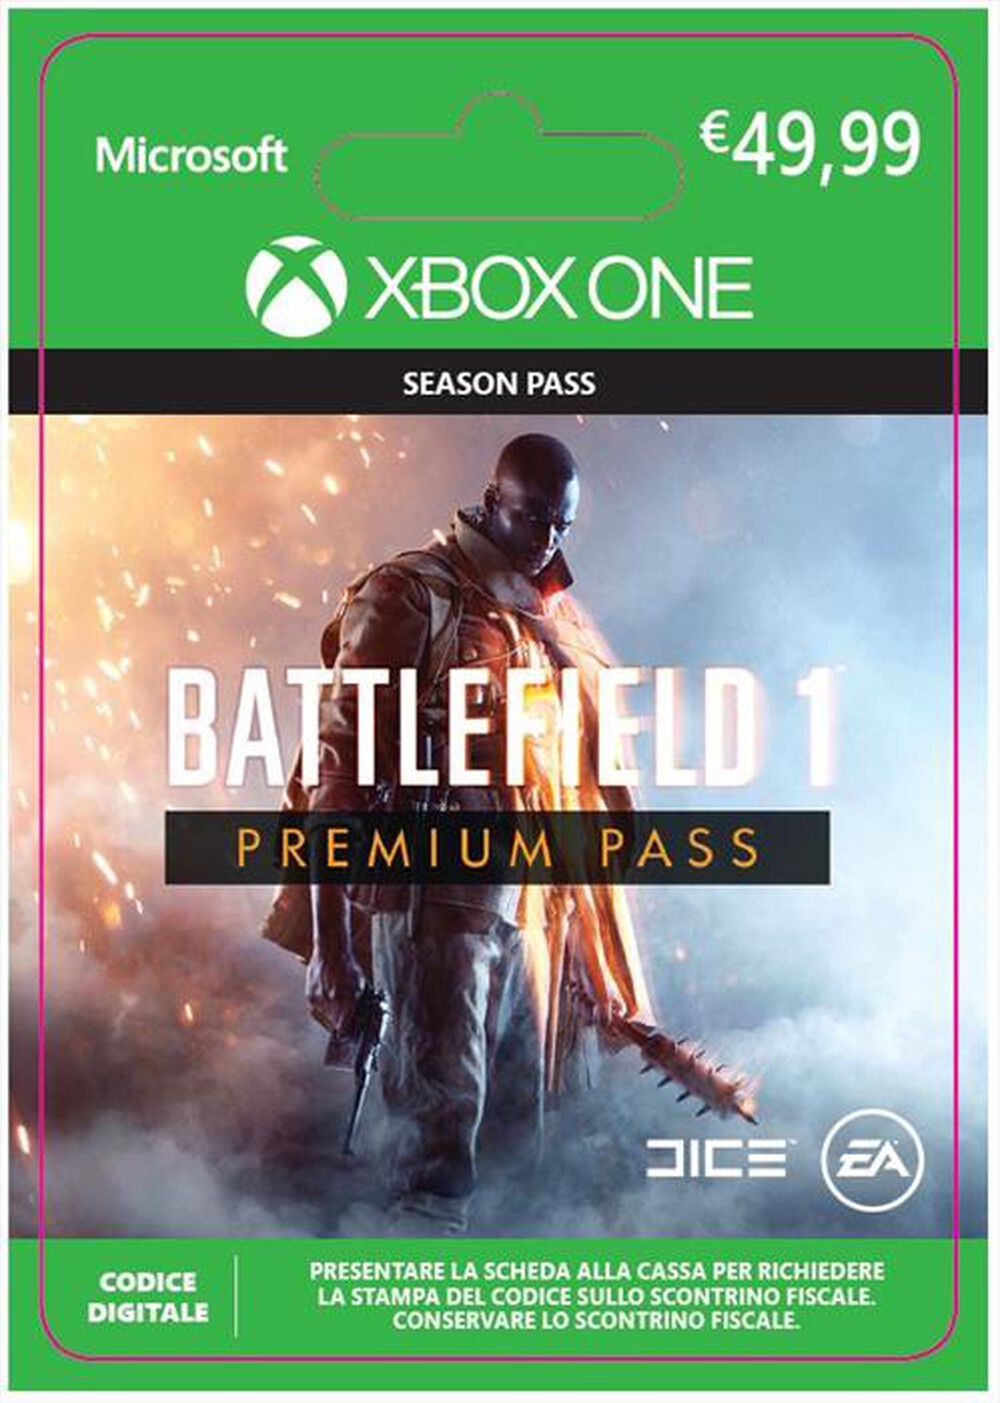 "MICROSOFT - Battlefield 1: Premium Pass DLC - "